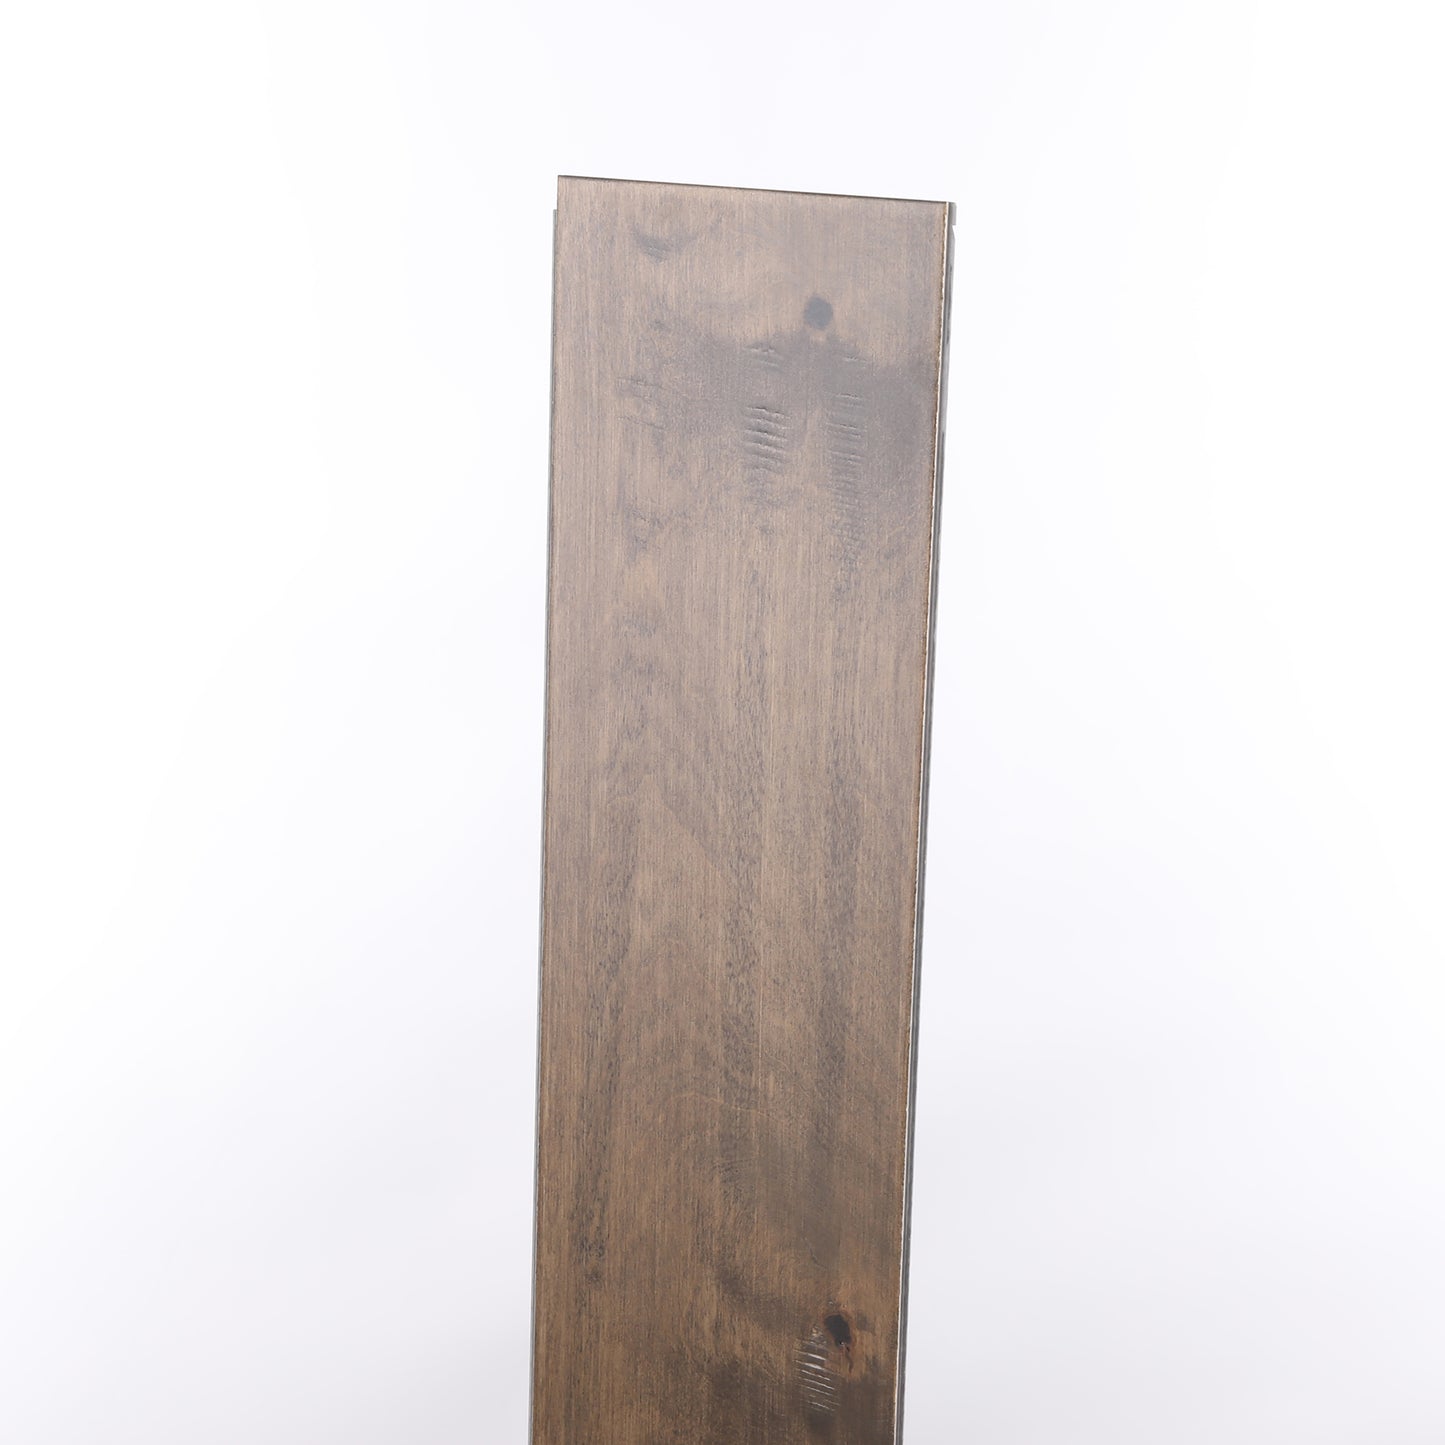 7mm Tanned Leather Waterproof Engineered Hardwood Flooring 5 in. Wide x Varying Length Long